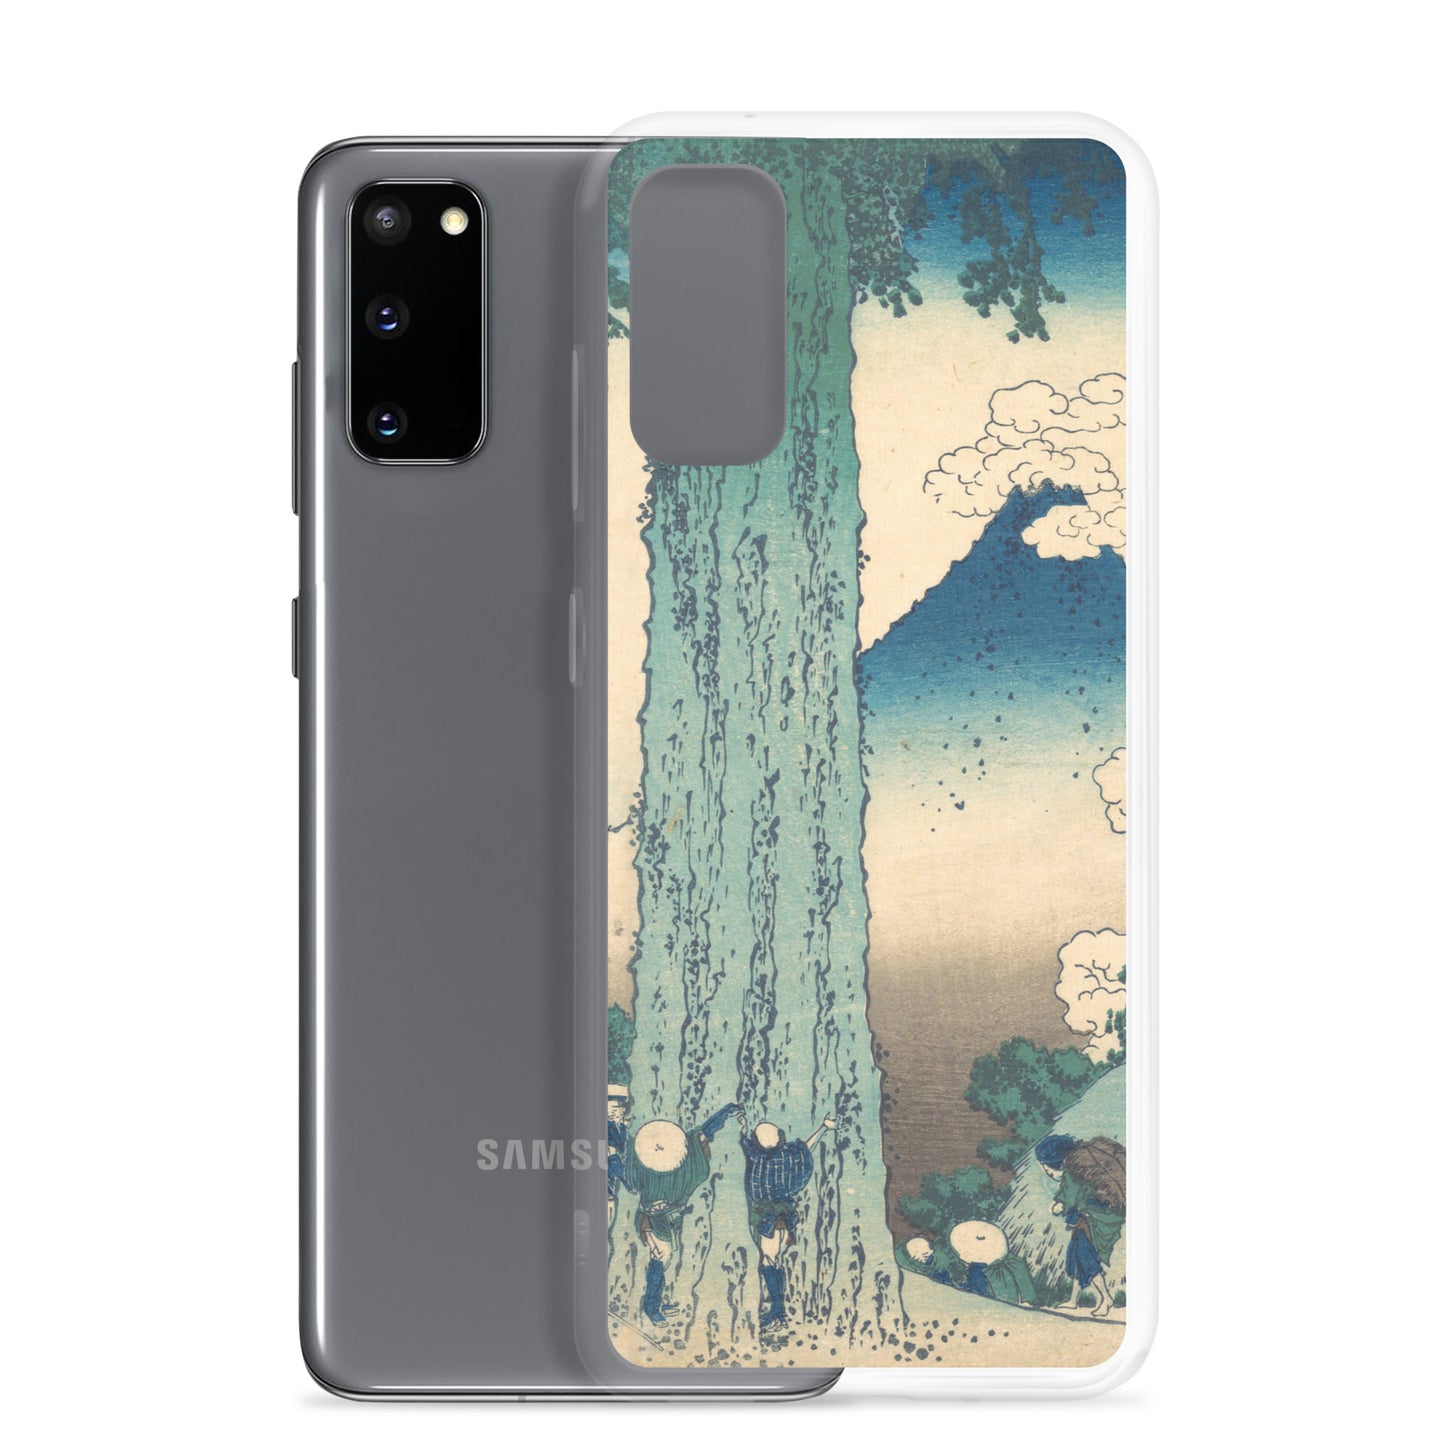 Samsung Galaxy Case Koshu Mishima goe B [Fugaku Sanjurokkei]